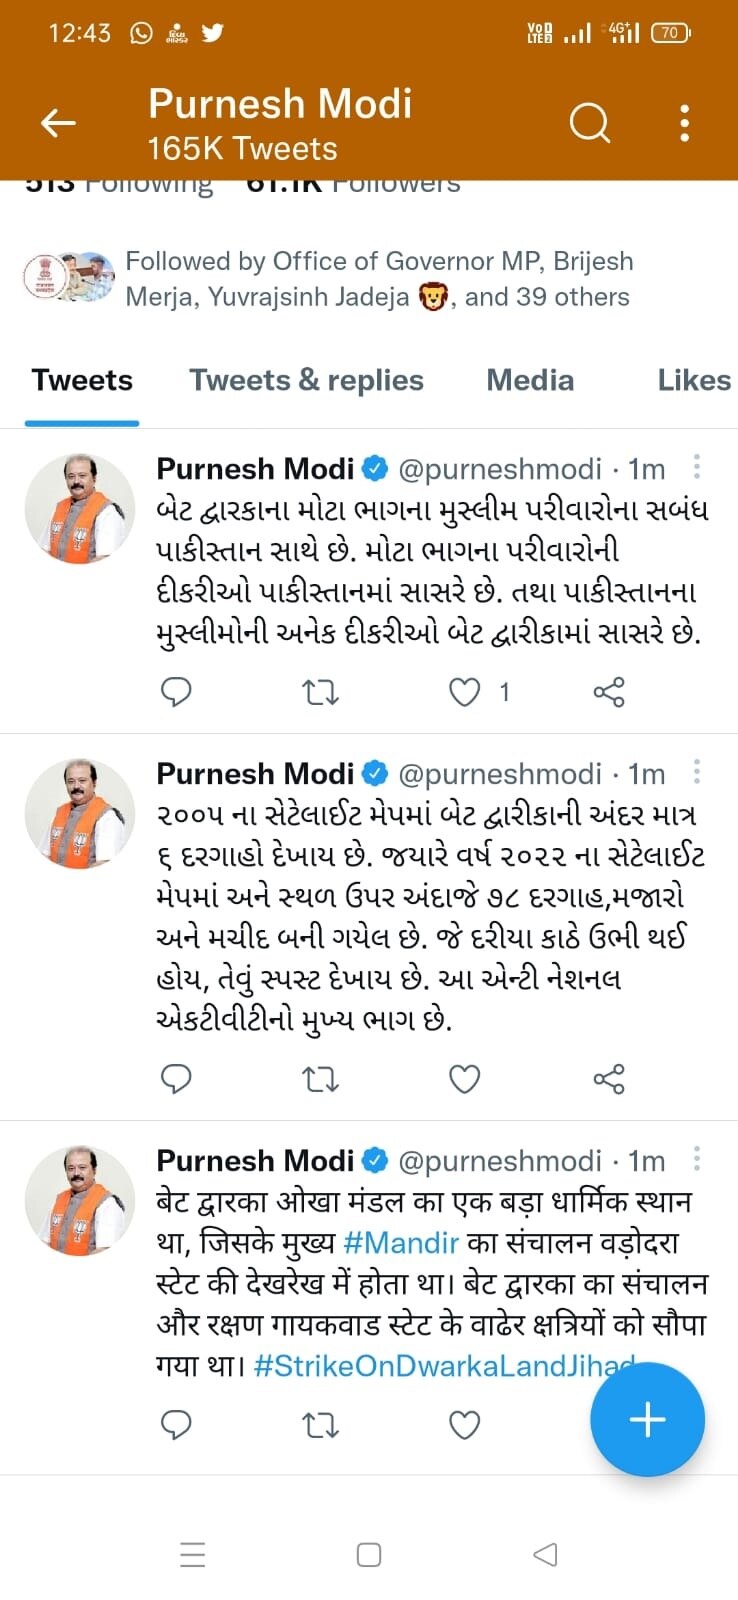 Purnesh Modiએ પોતાના ટ્વીટમાં મુસ્લીમો વિશે એવું તો શું લખ્યું કે પછી ડિલીટ કરવાં પડ્યાં